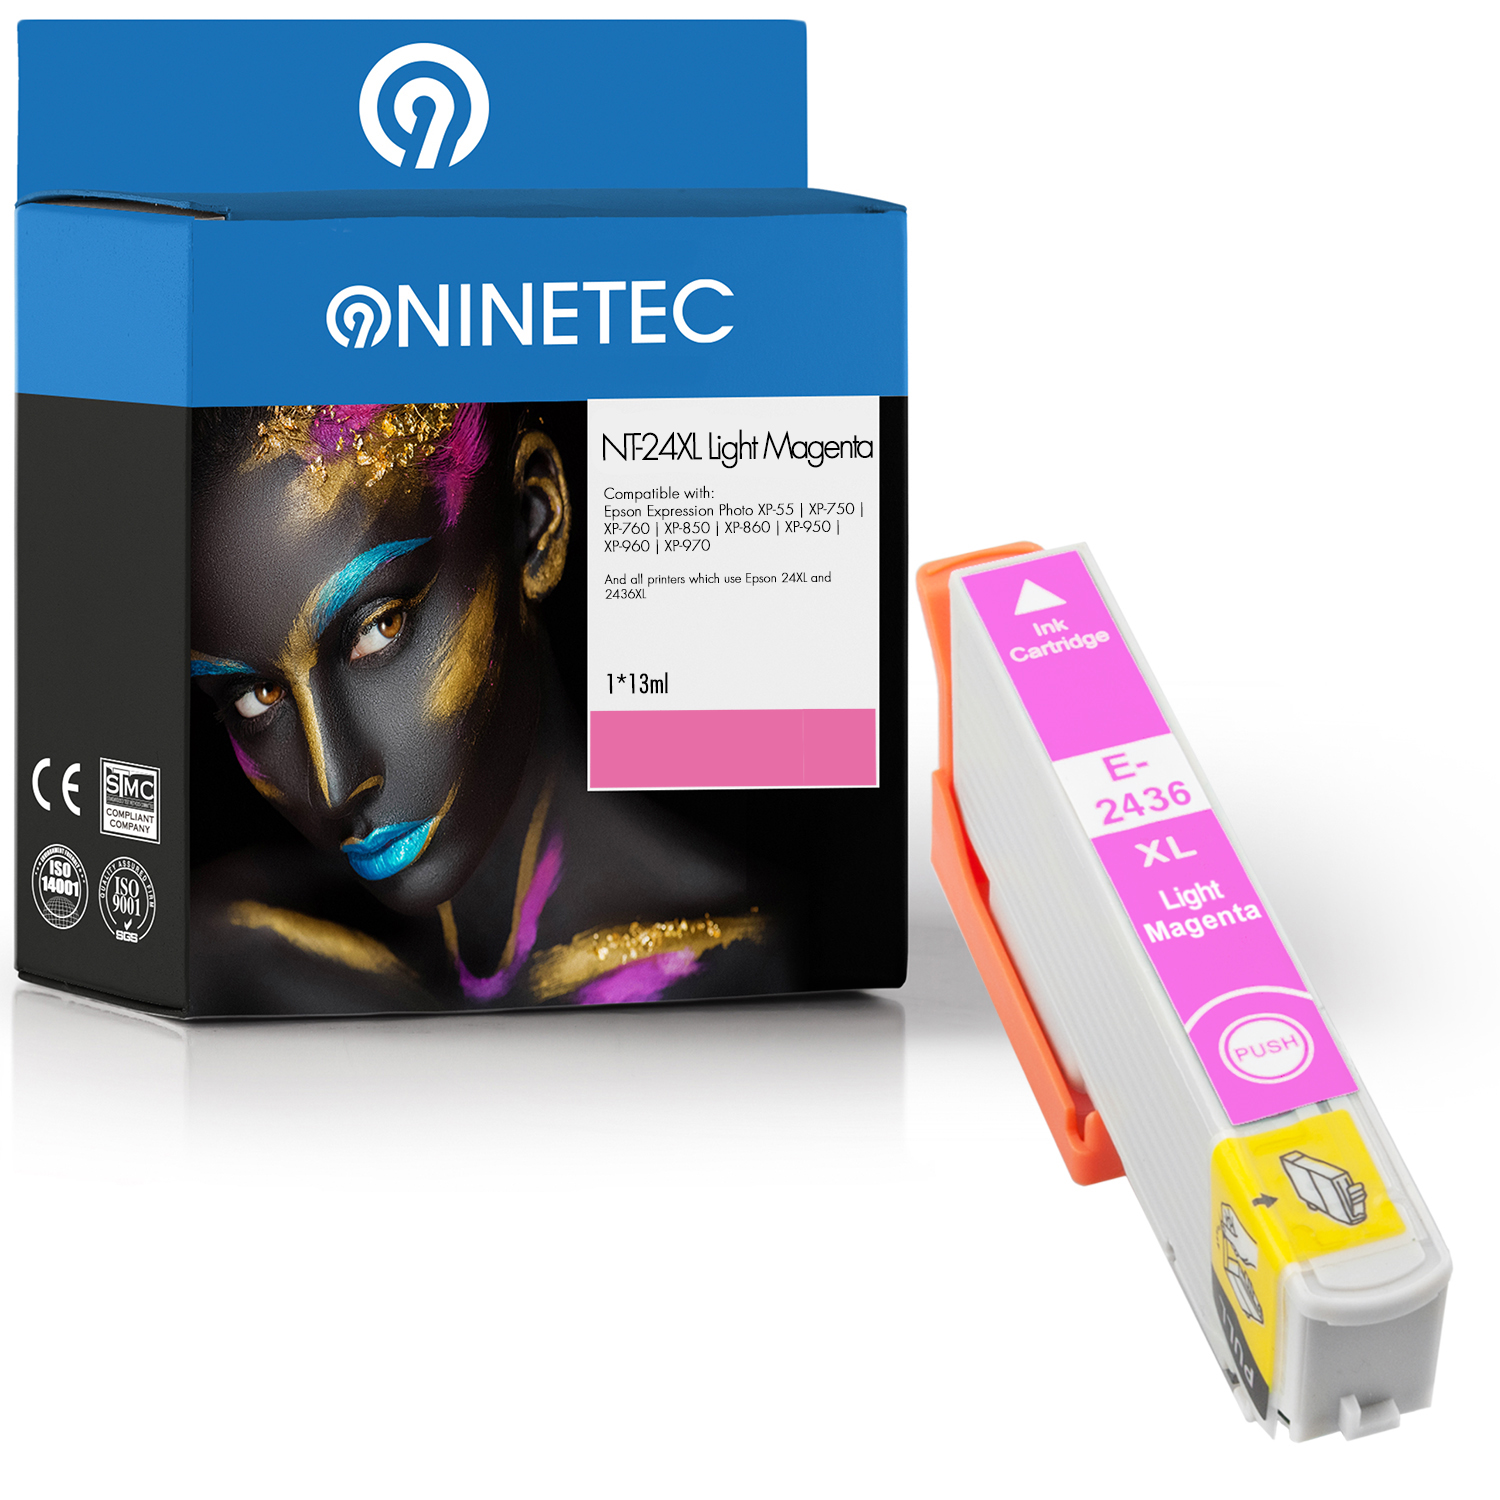 NINETEC 1 lightmagenta 24XL Tintenpatrone 24364010) Epson ersetzt 13 T (C T2436 Patrone